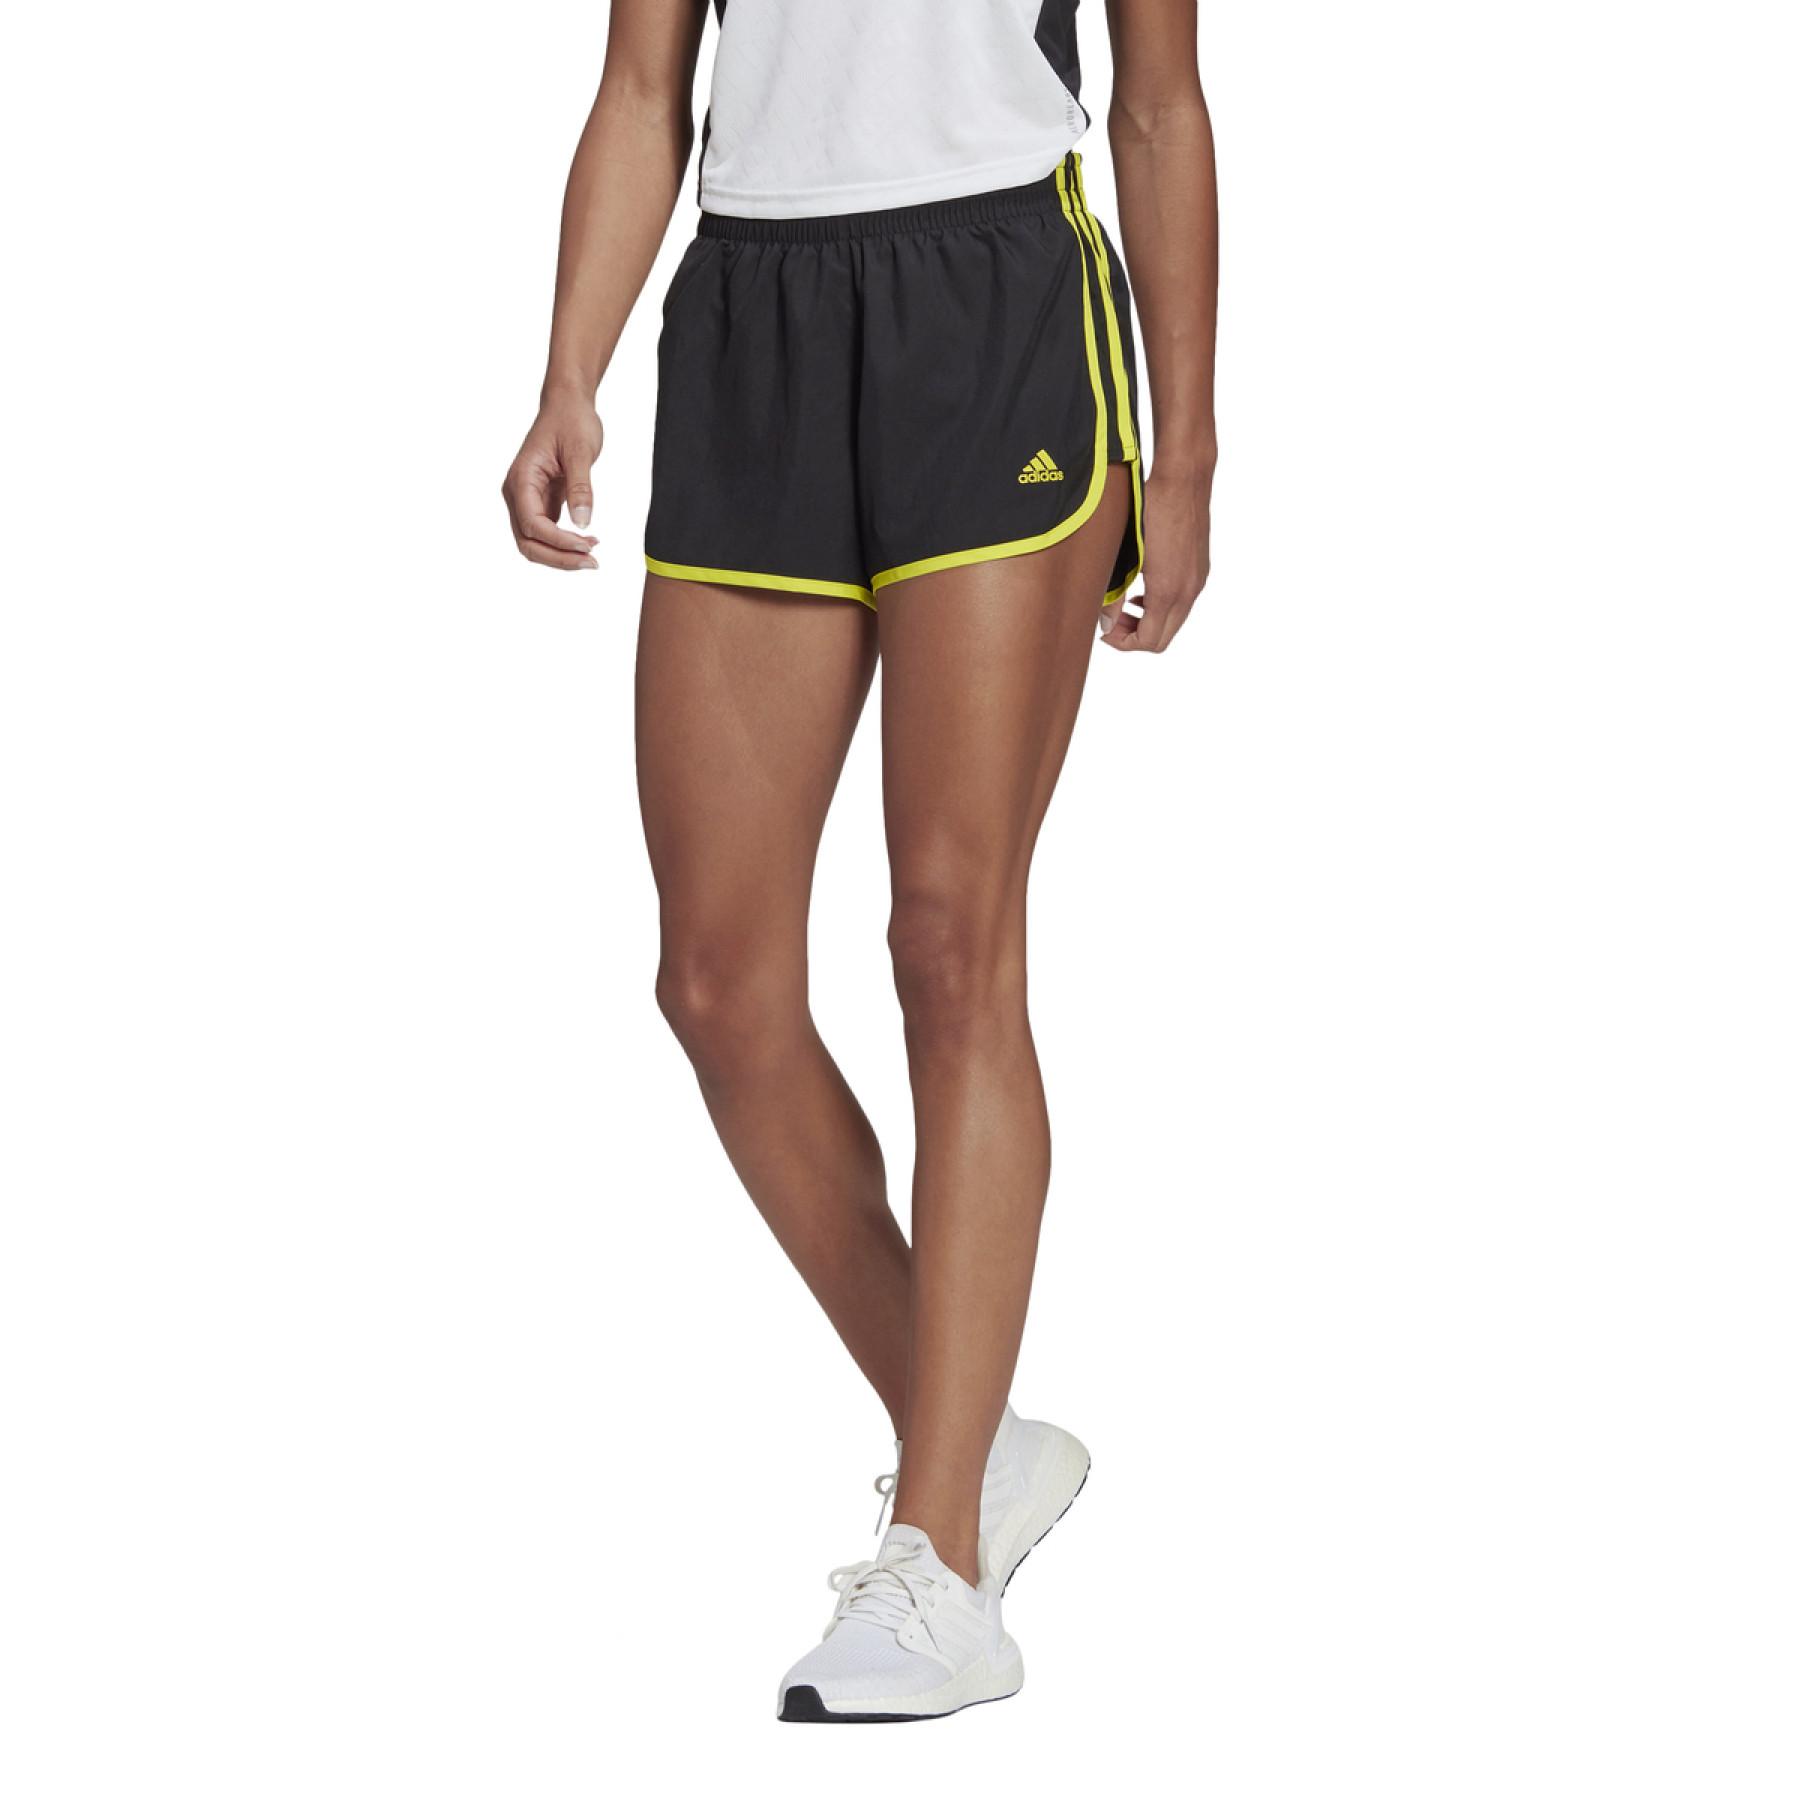 Dames shorts adidas Marathon 20